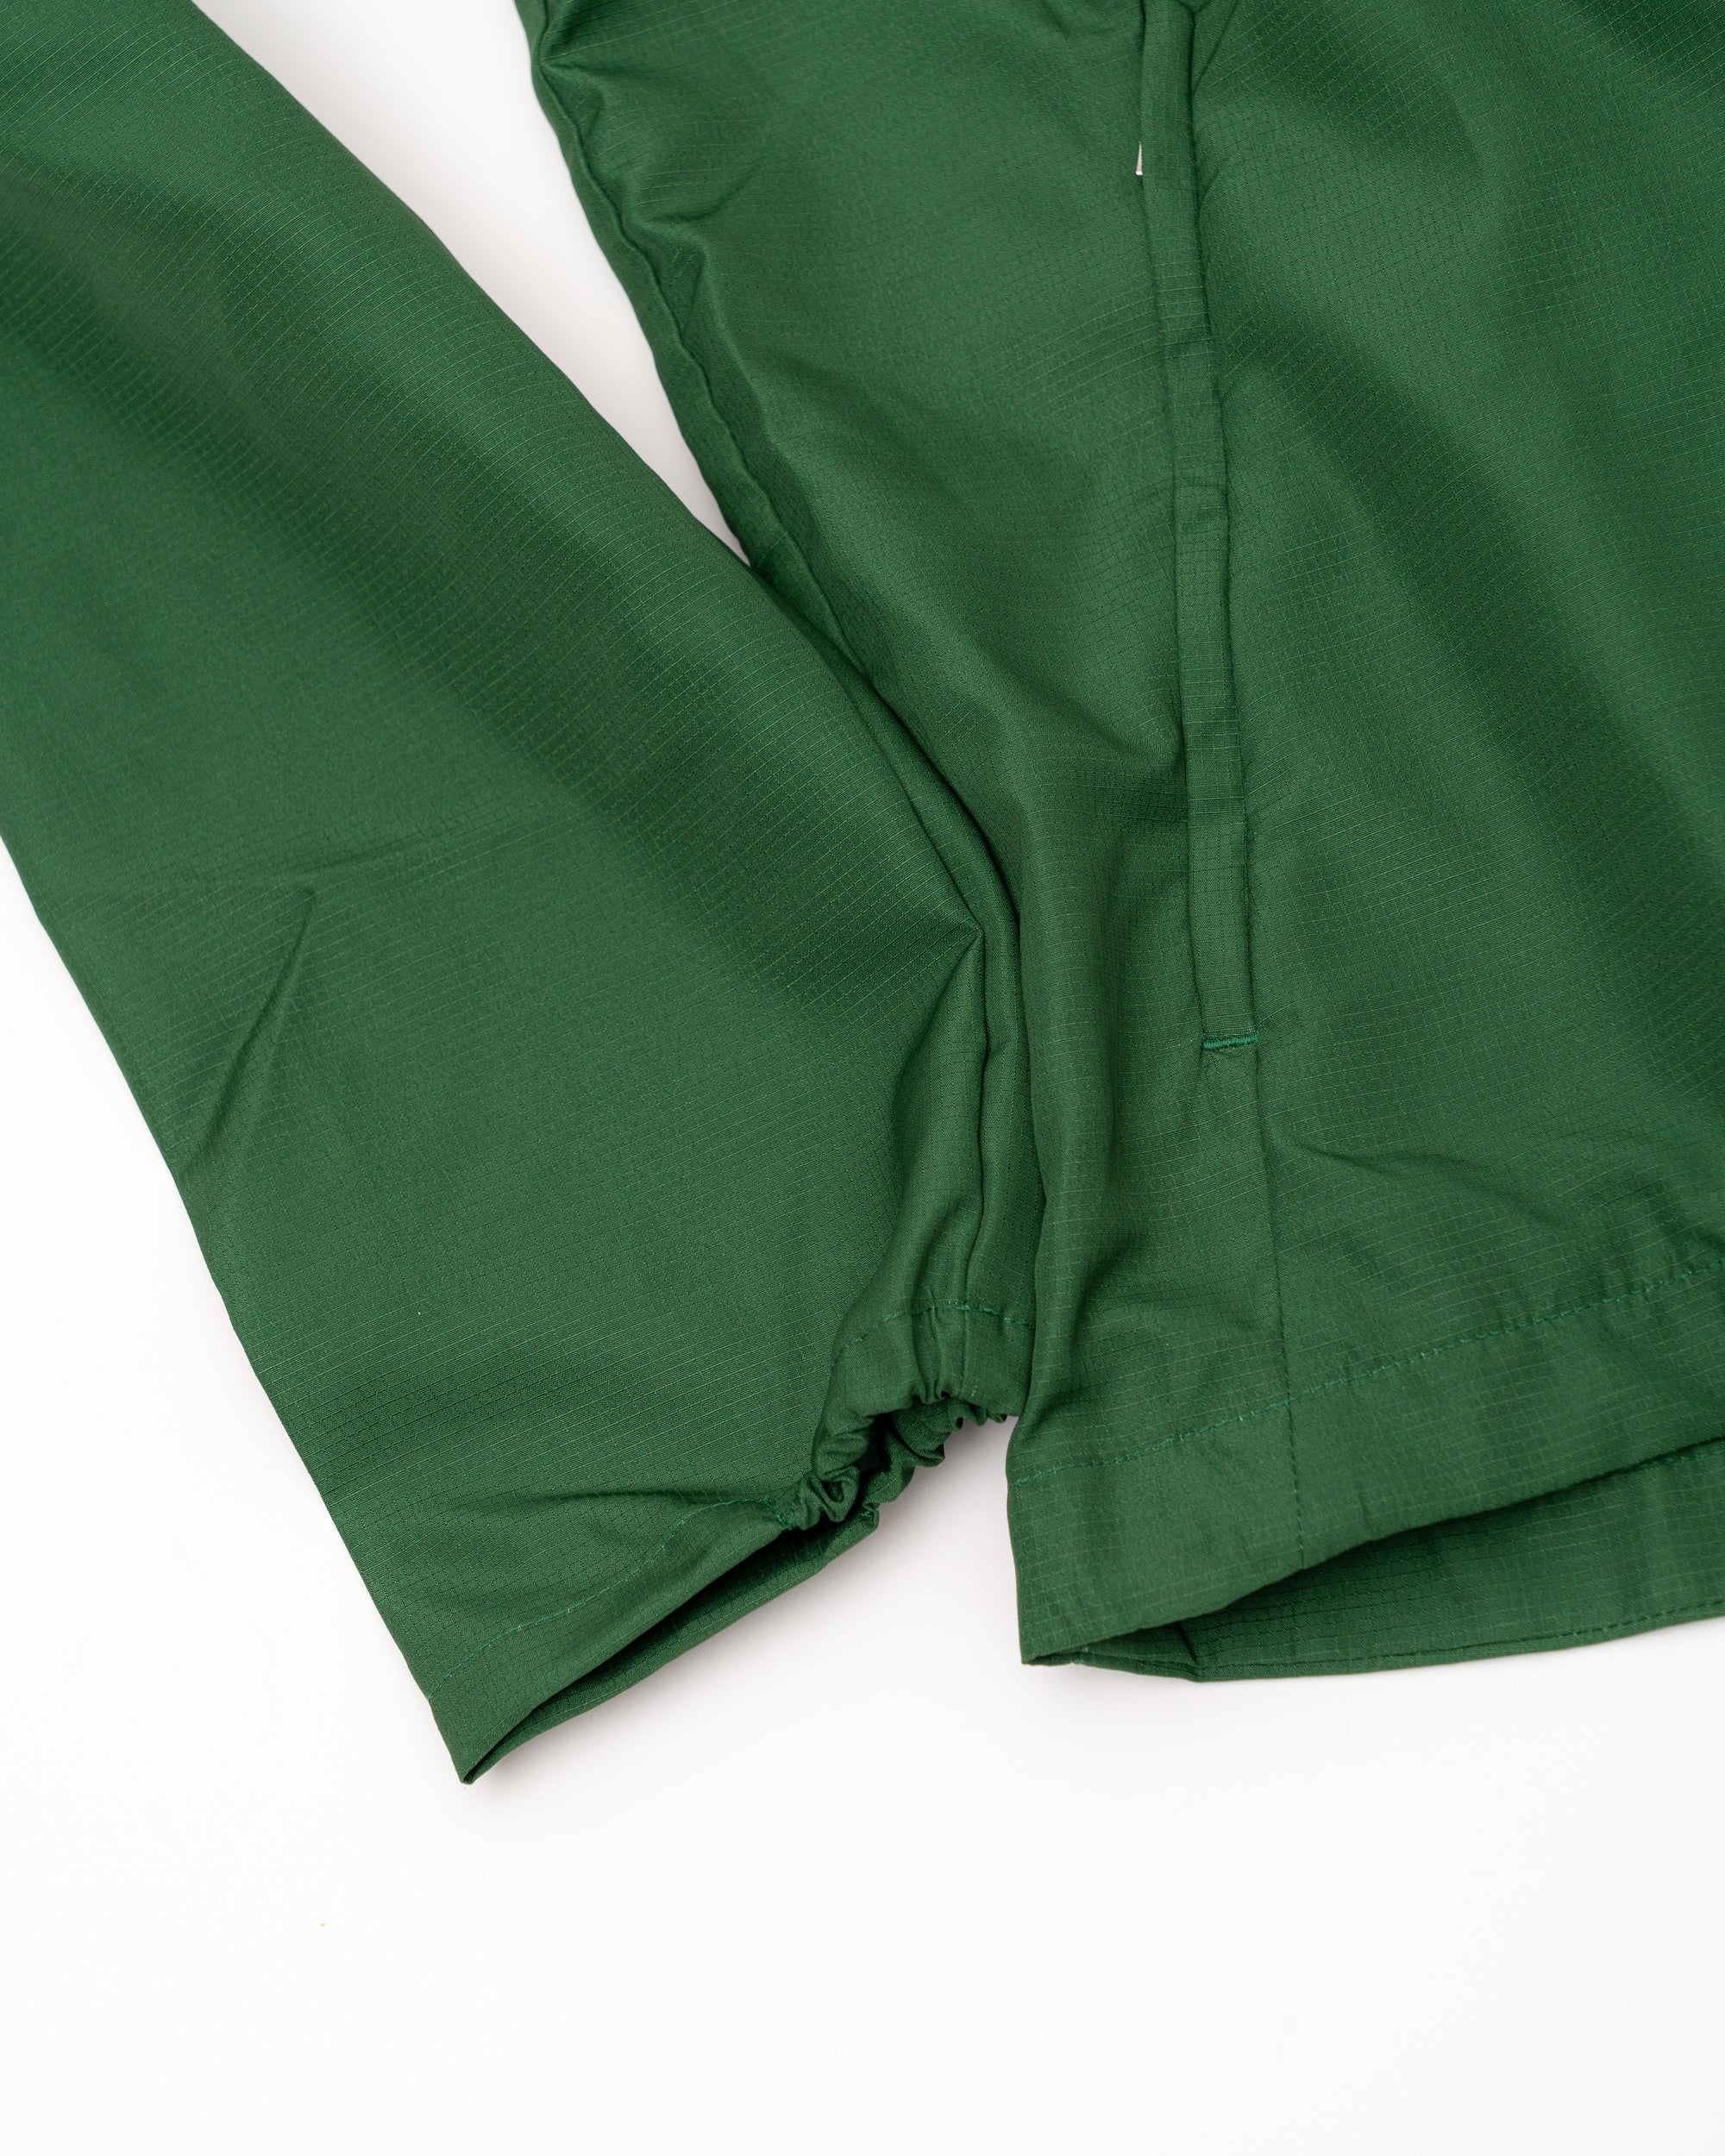 Midway Sports Men's "Iguana Greens" Packable Golf Rain Jacket